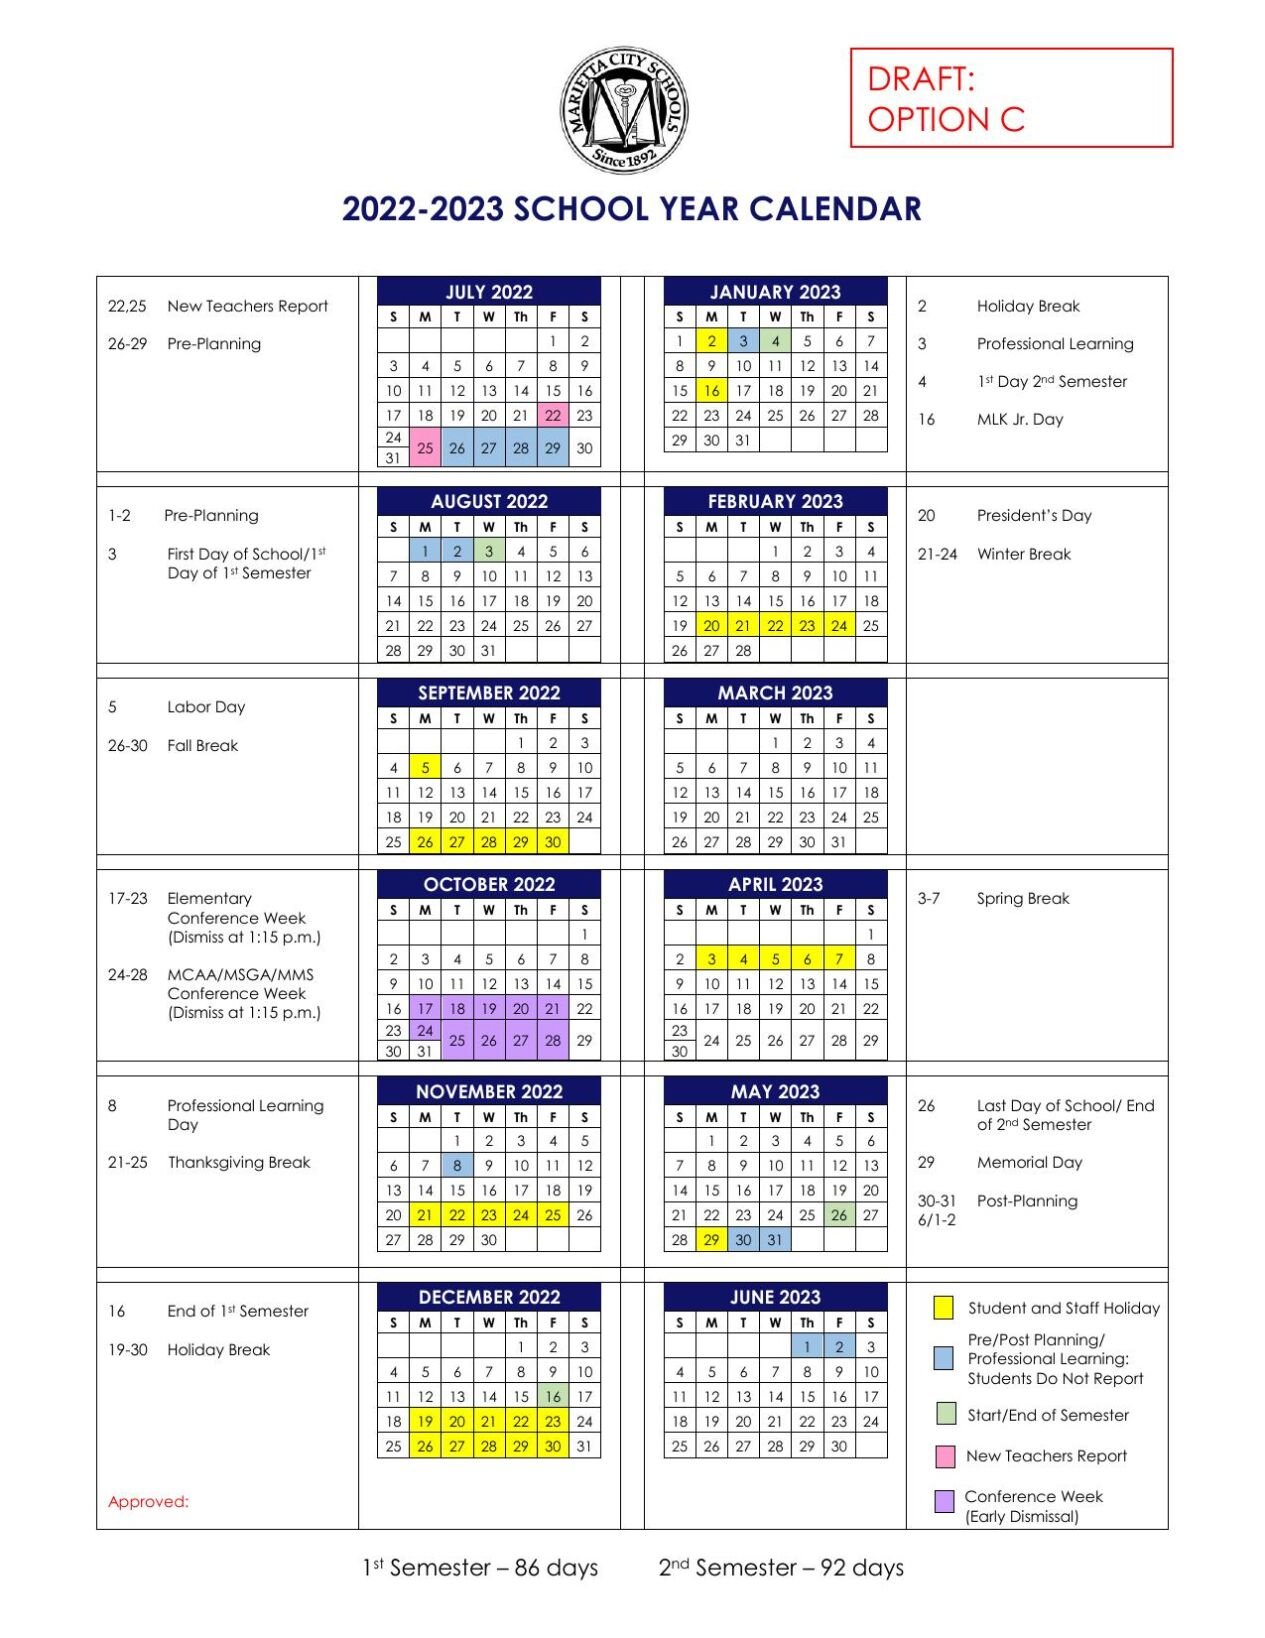 Ohio University Academic Calendar 2022 23 2022-23 Marietta Schools Calendar Option C | | Mdjonline.com